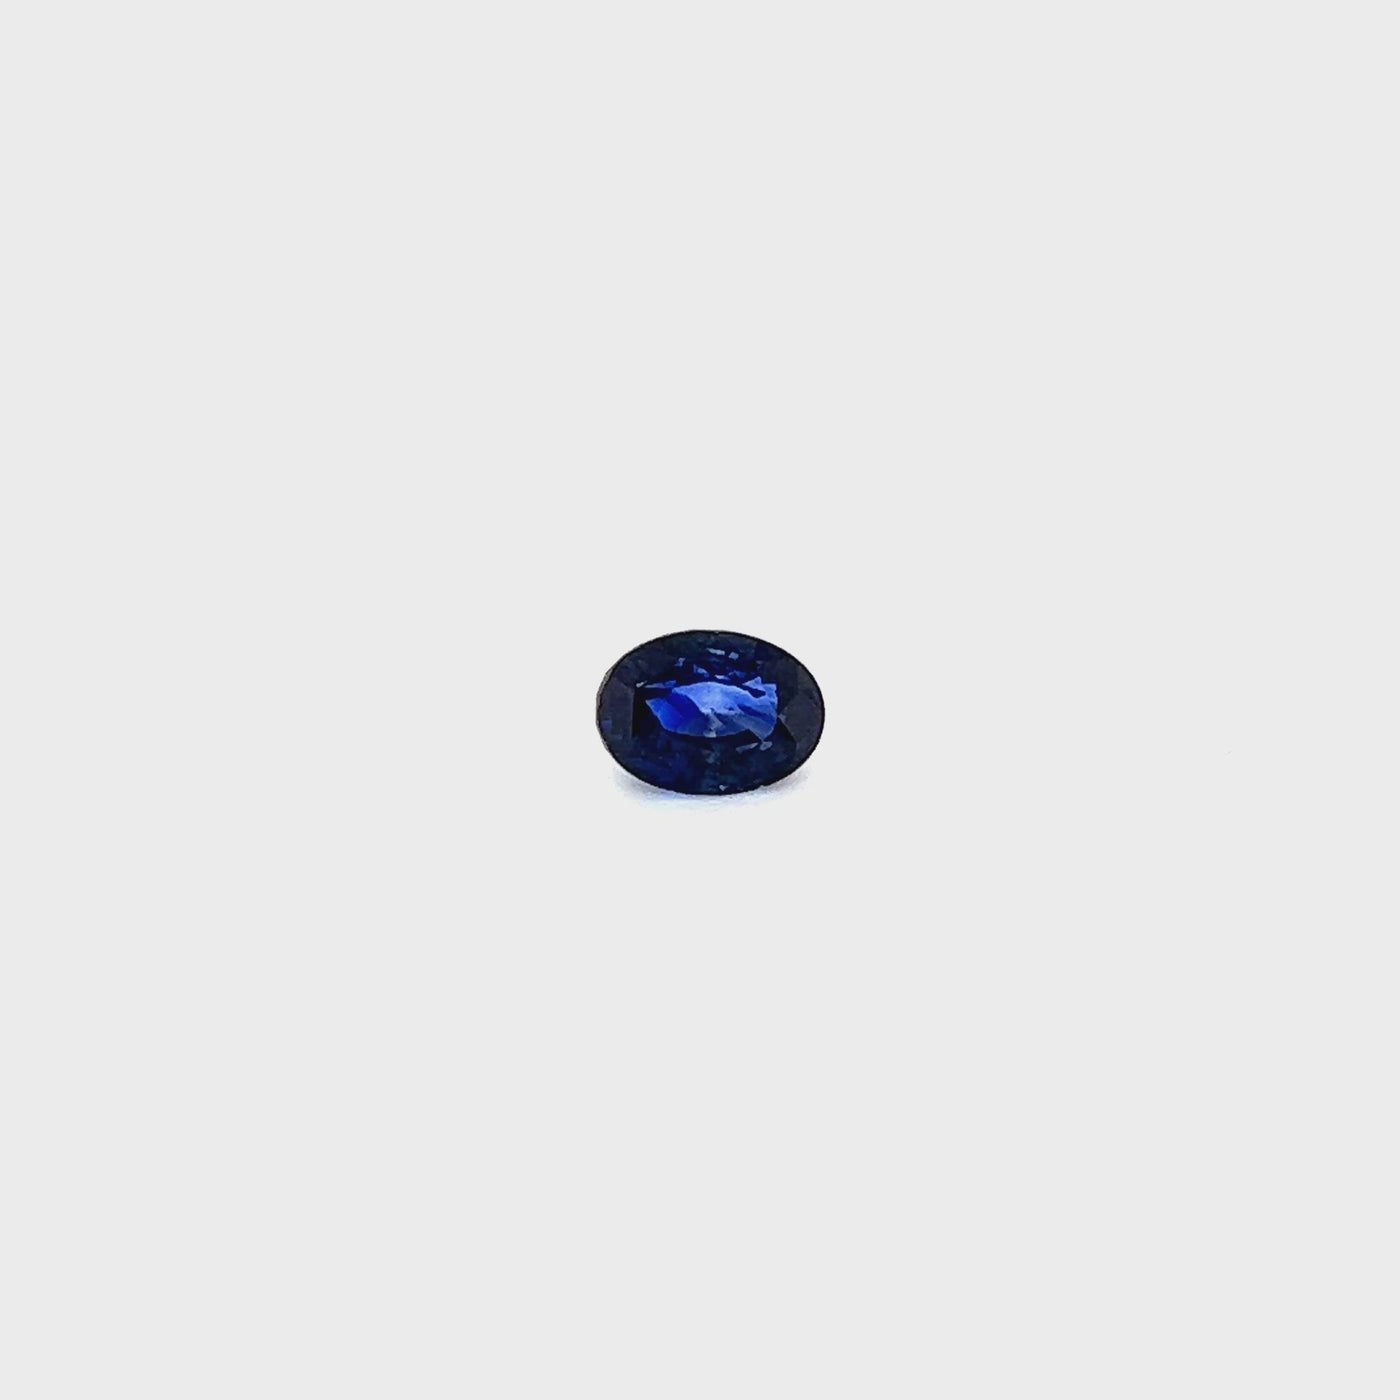 Saphir bleu 1.95 carats ovale non chauffé